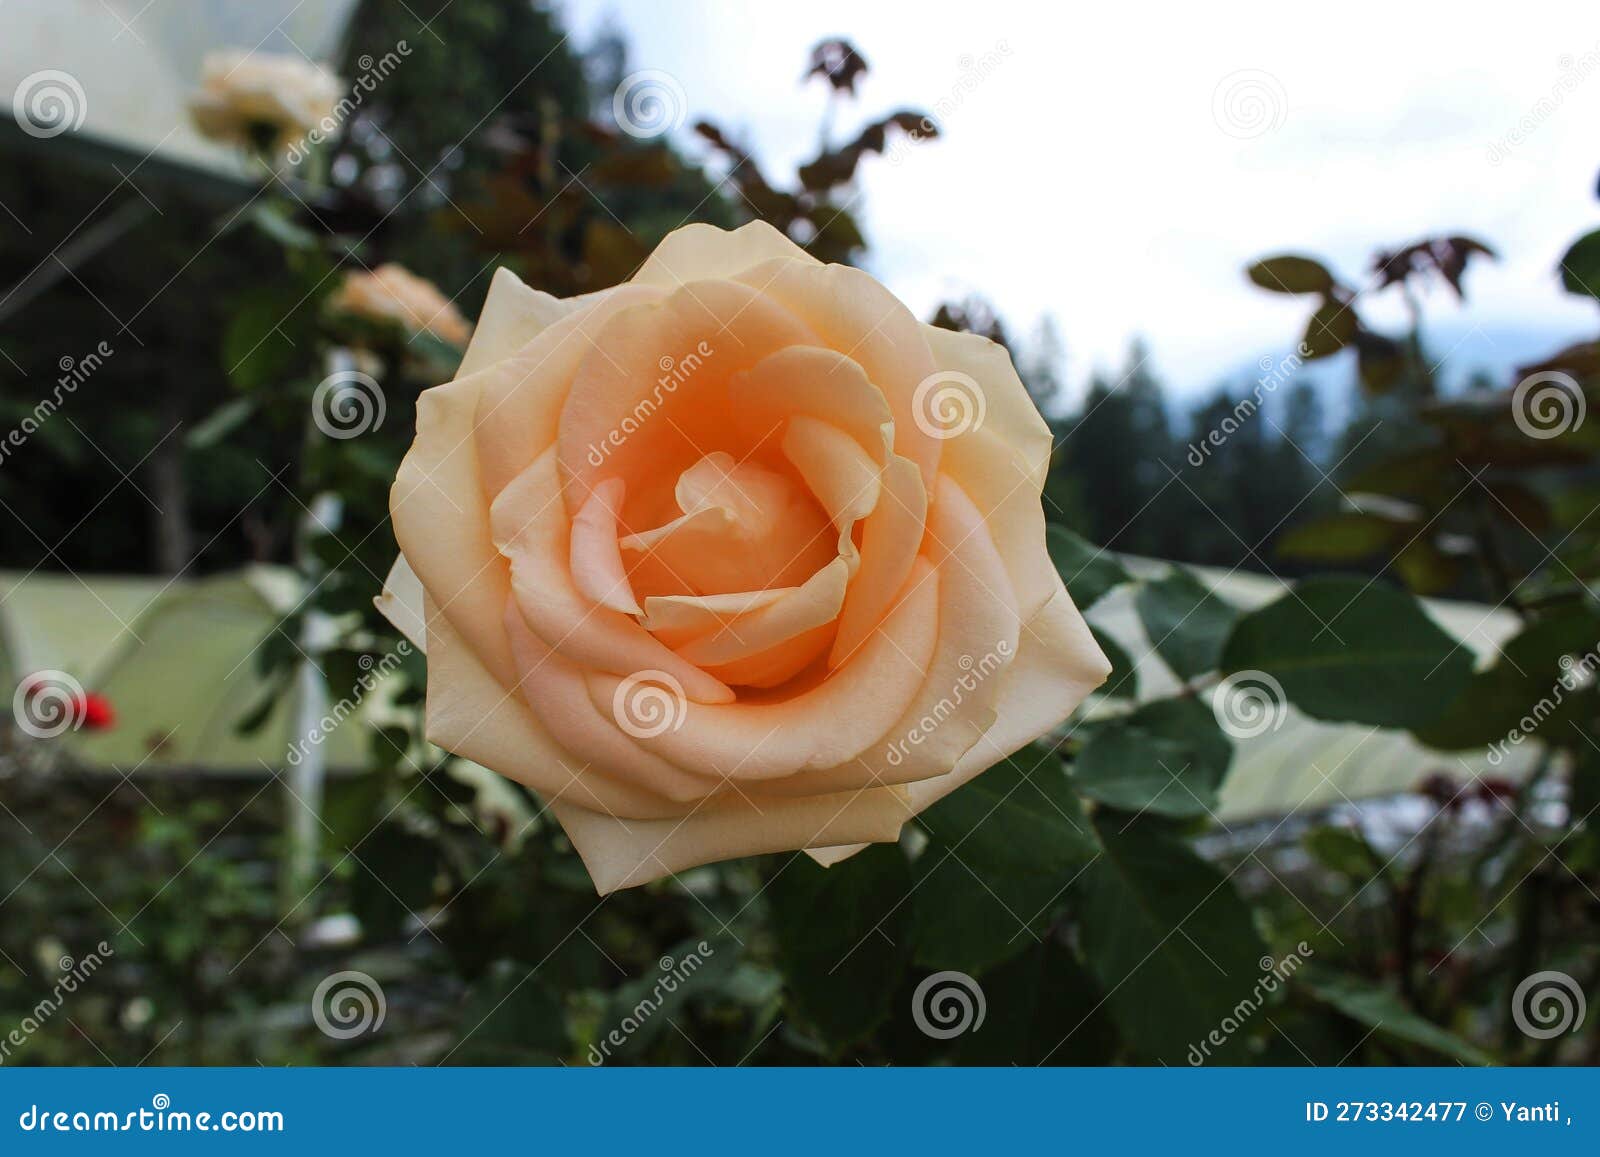 rose (rosa) flower in peach color